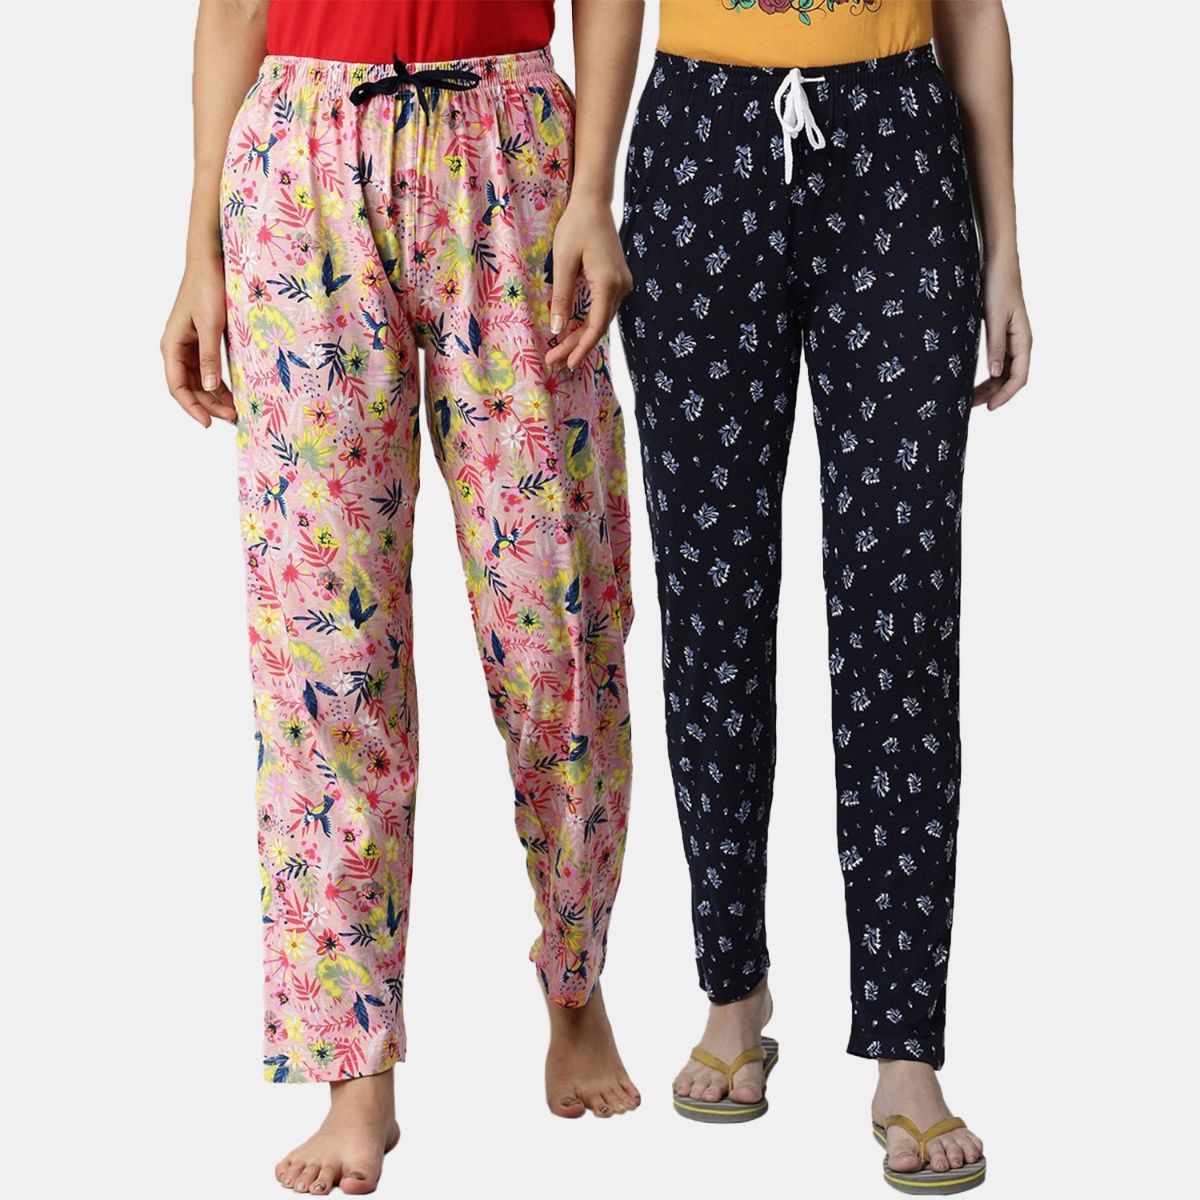 Celestial Night Women's Sleep Pants, Sizes XS-3X - Walmart.com